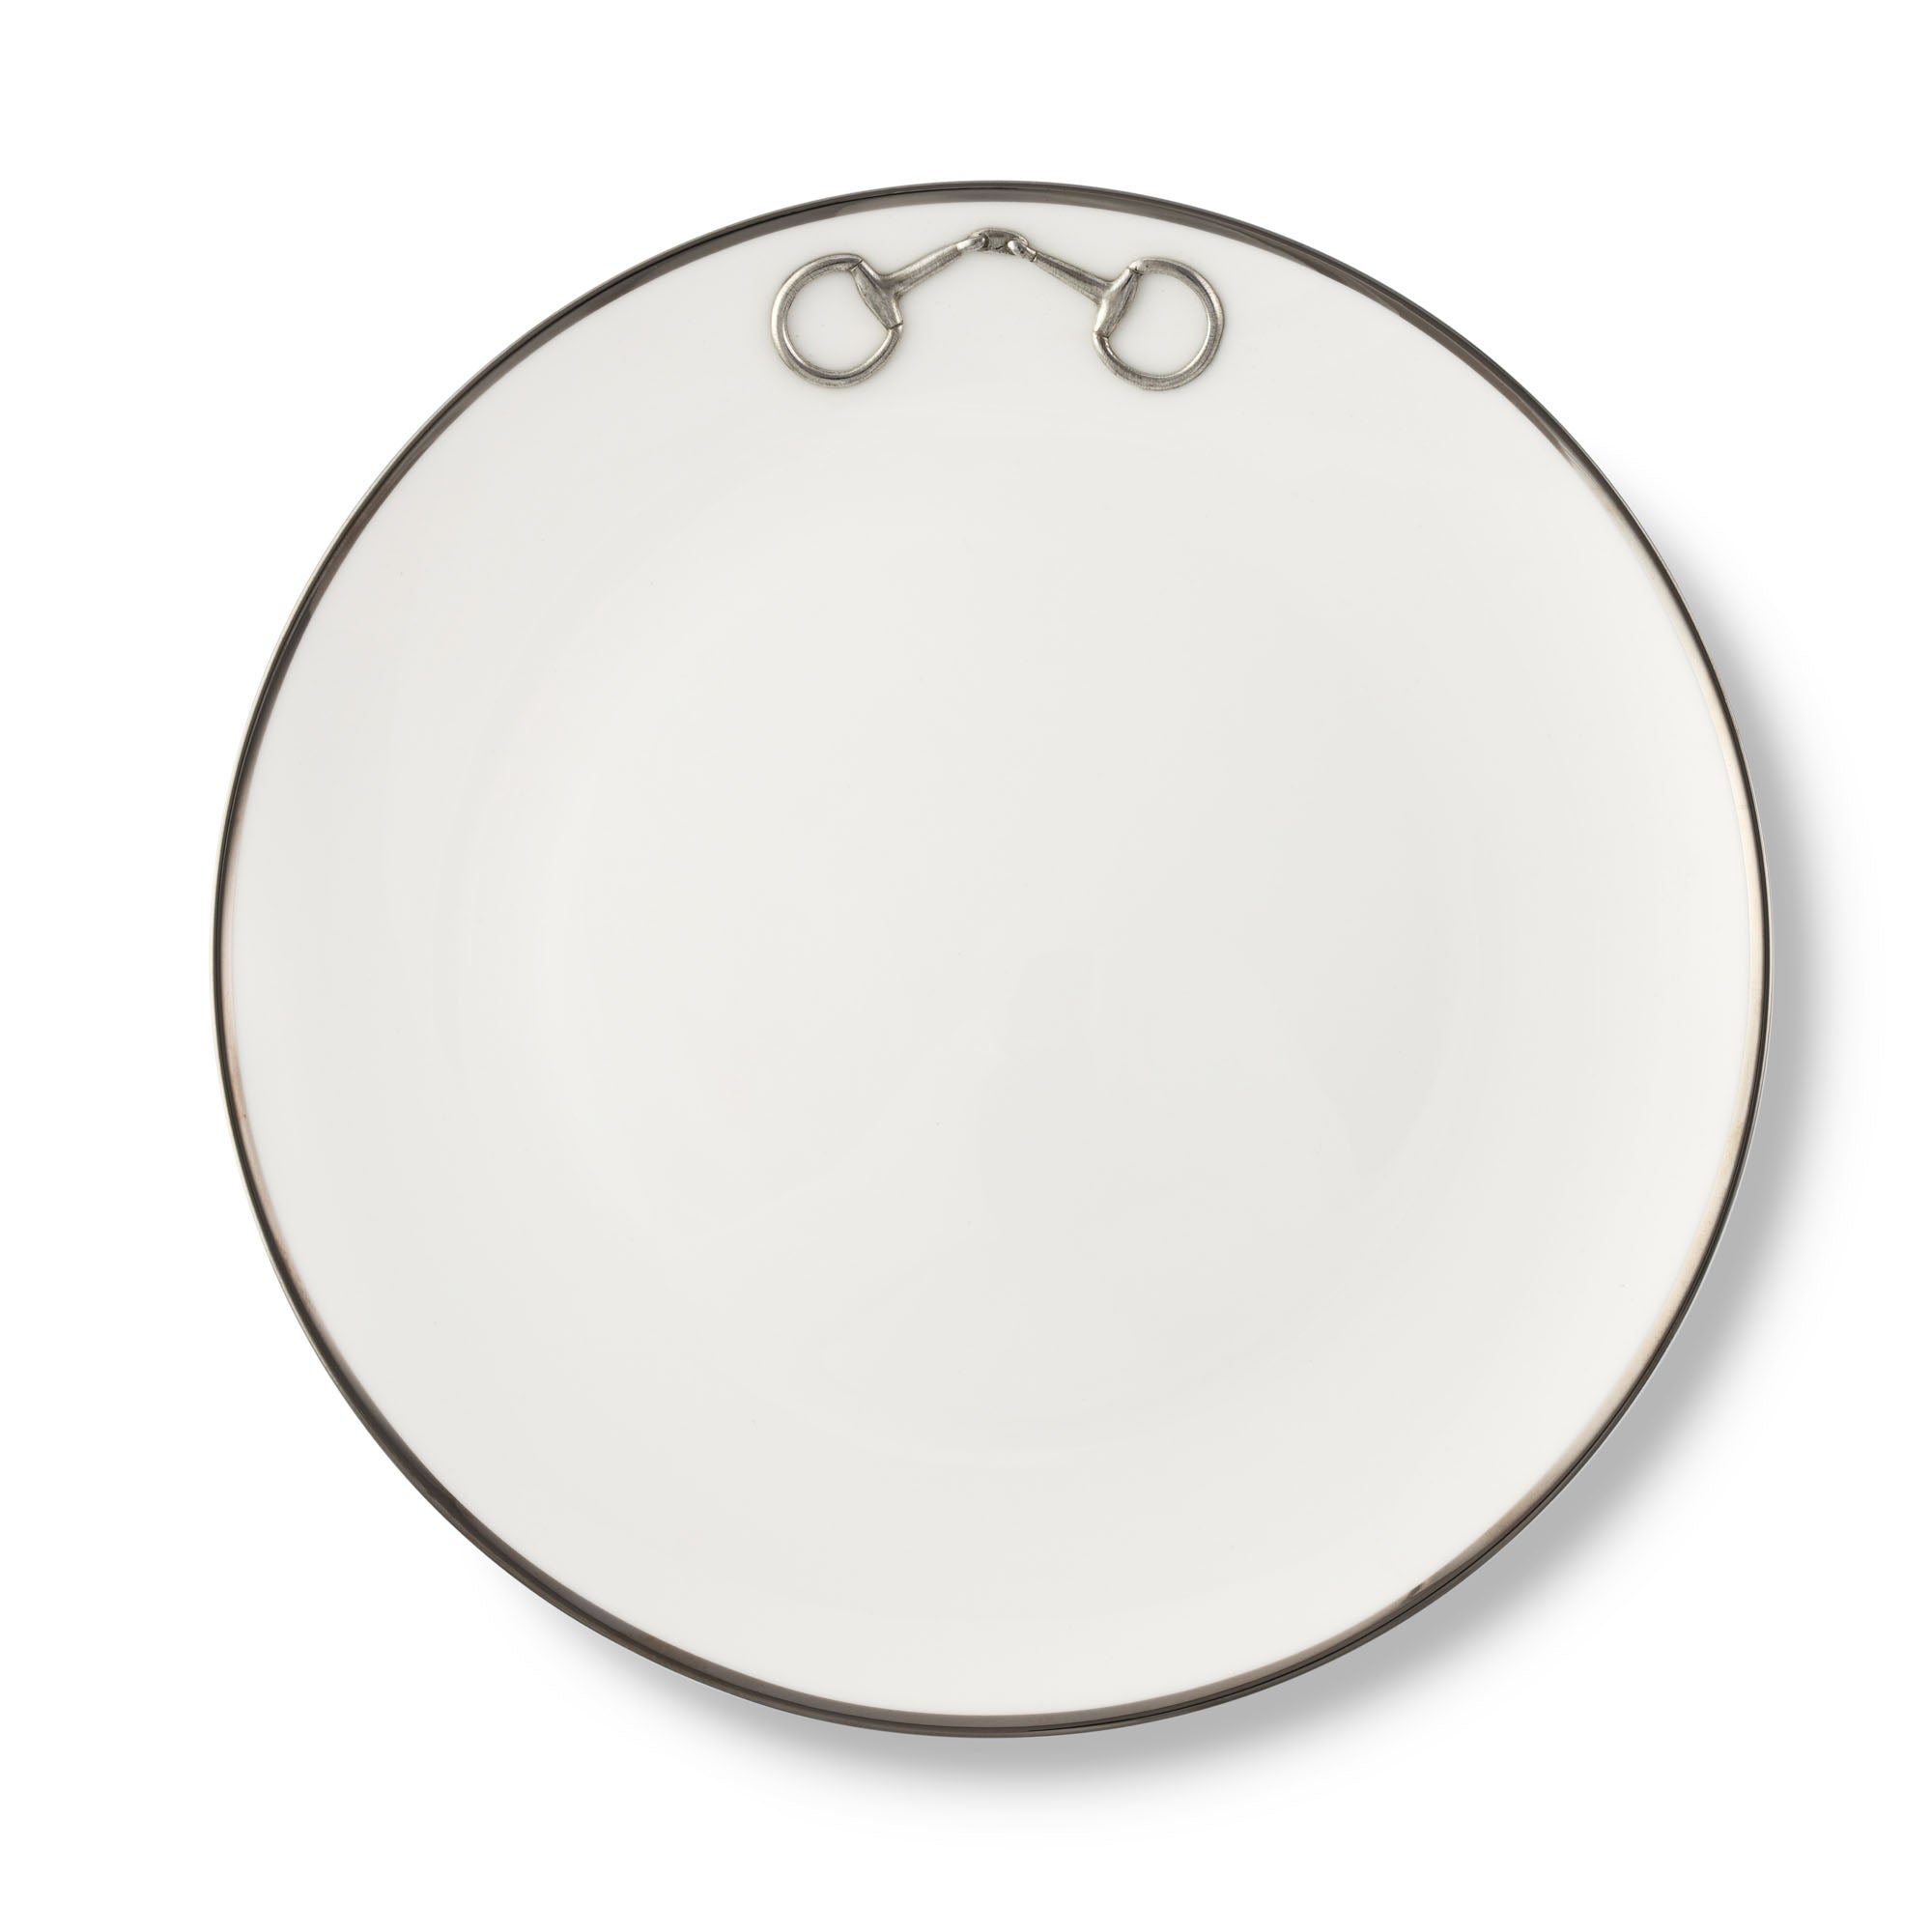 Vagabond House Pewter Bit Bone China Round Dinner Plate Platinum Rim Product Image